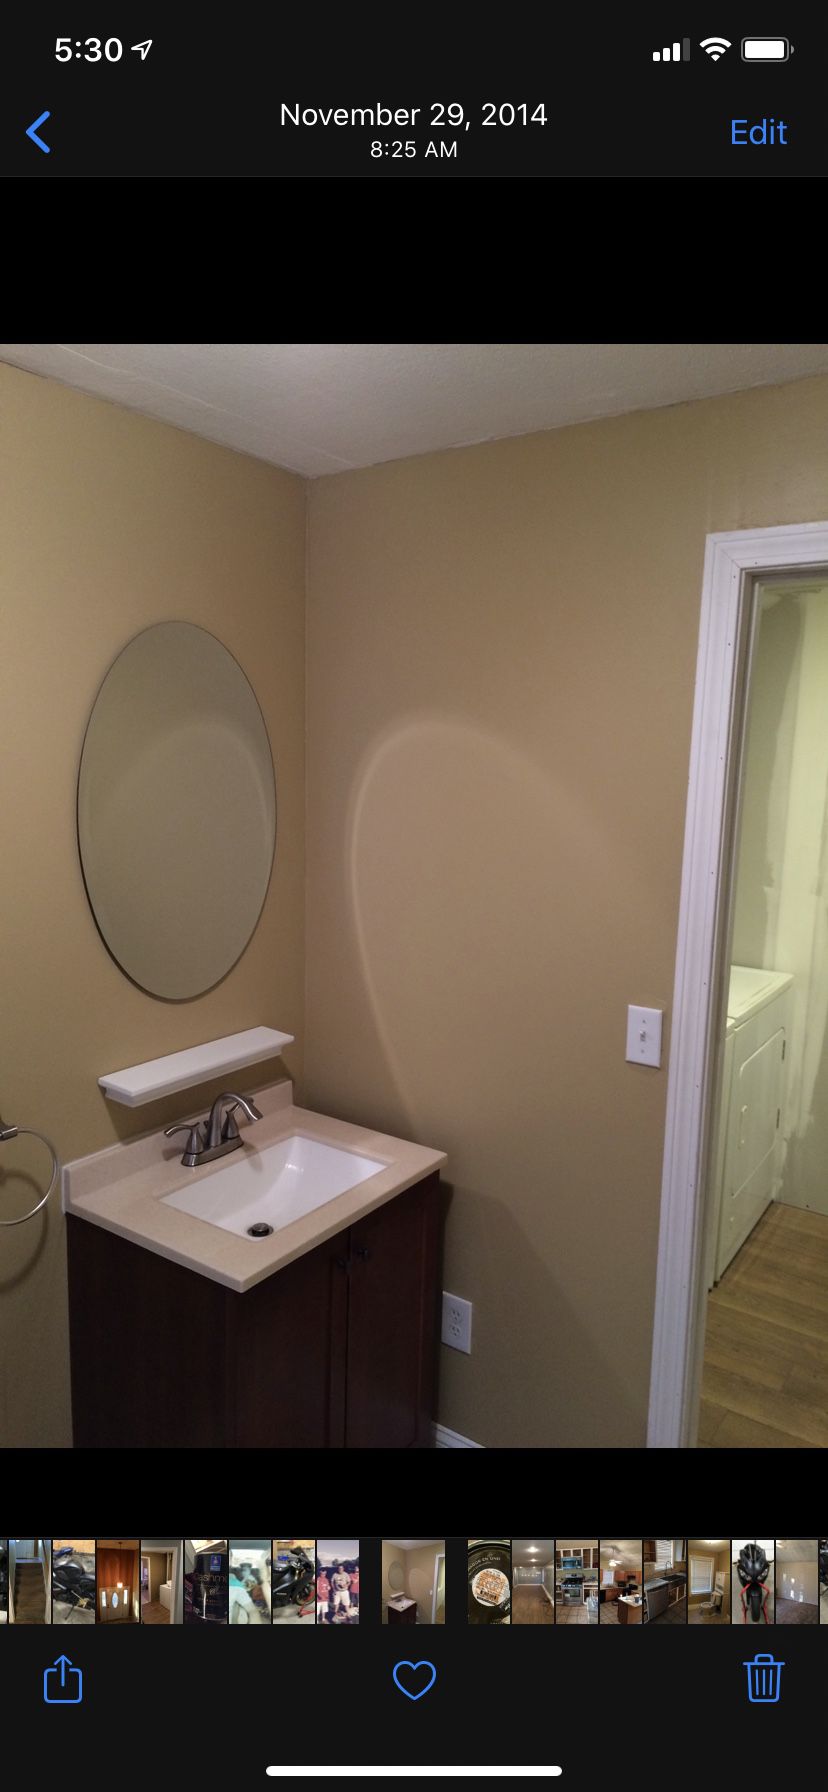 Bathroom vanity and mirror